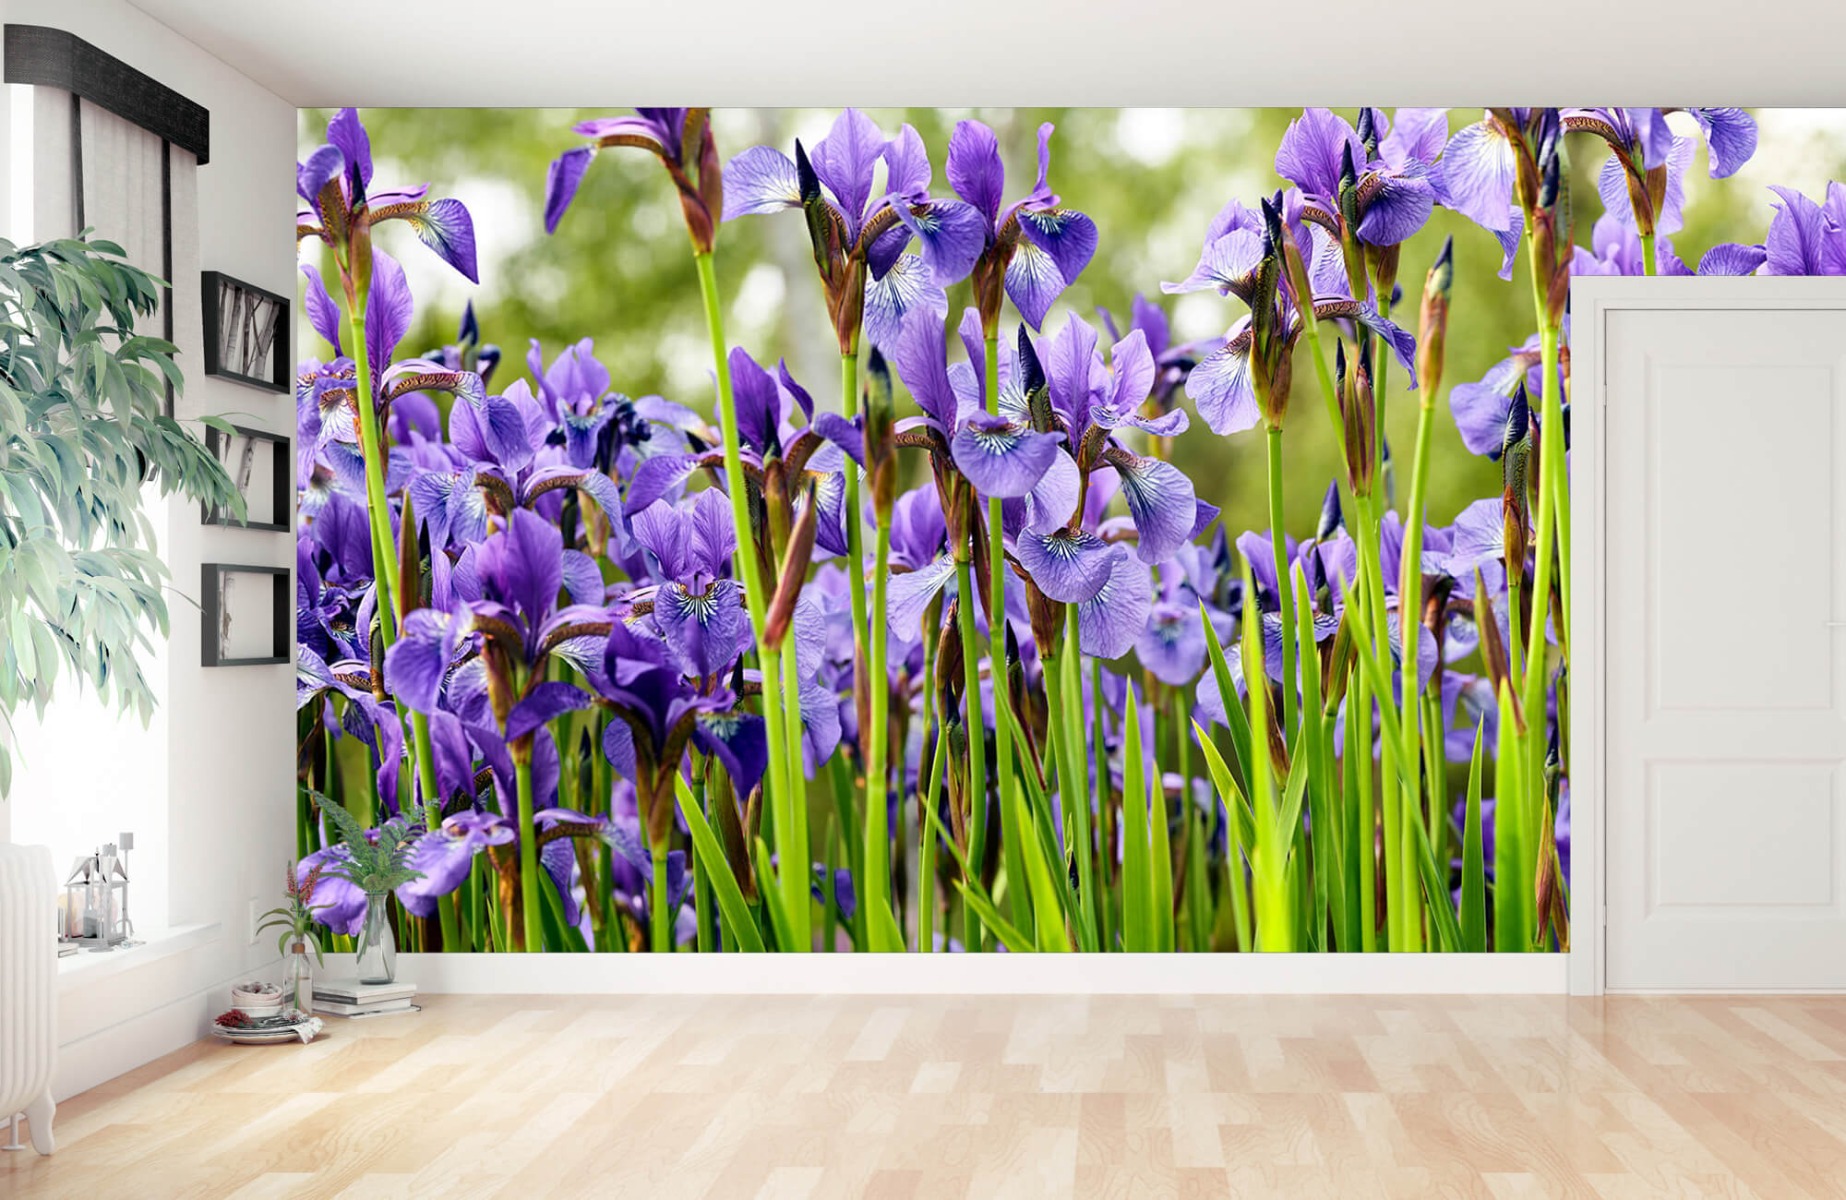 Flower fields - Irises  - Bedroom 12